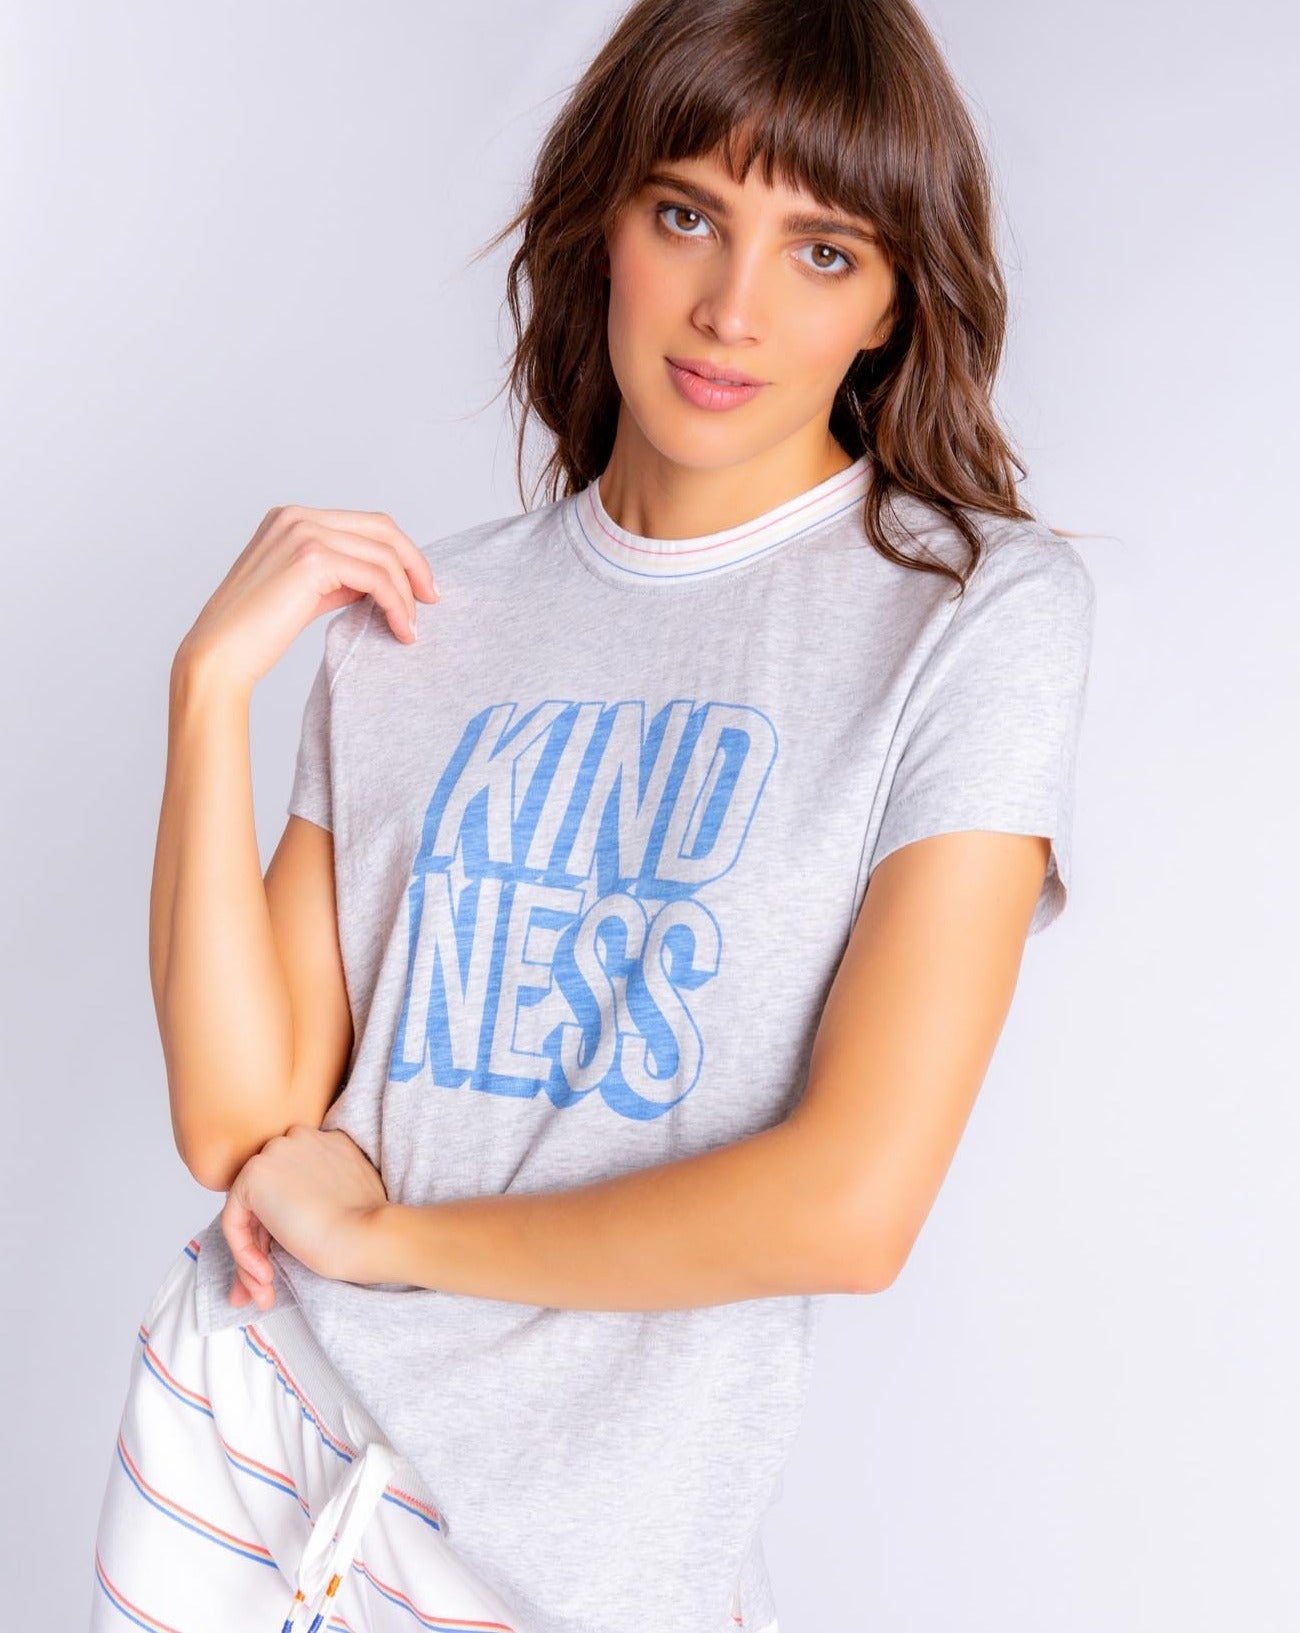 Kindness Rules Short Sleeve T-Shirt, Size L